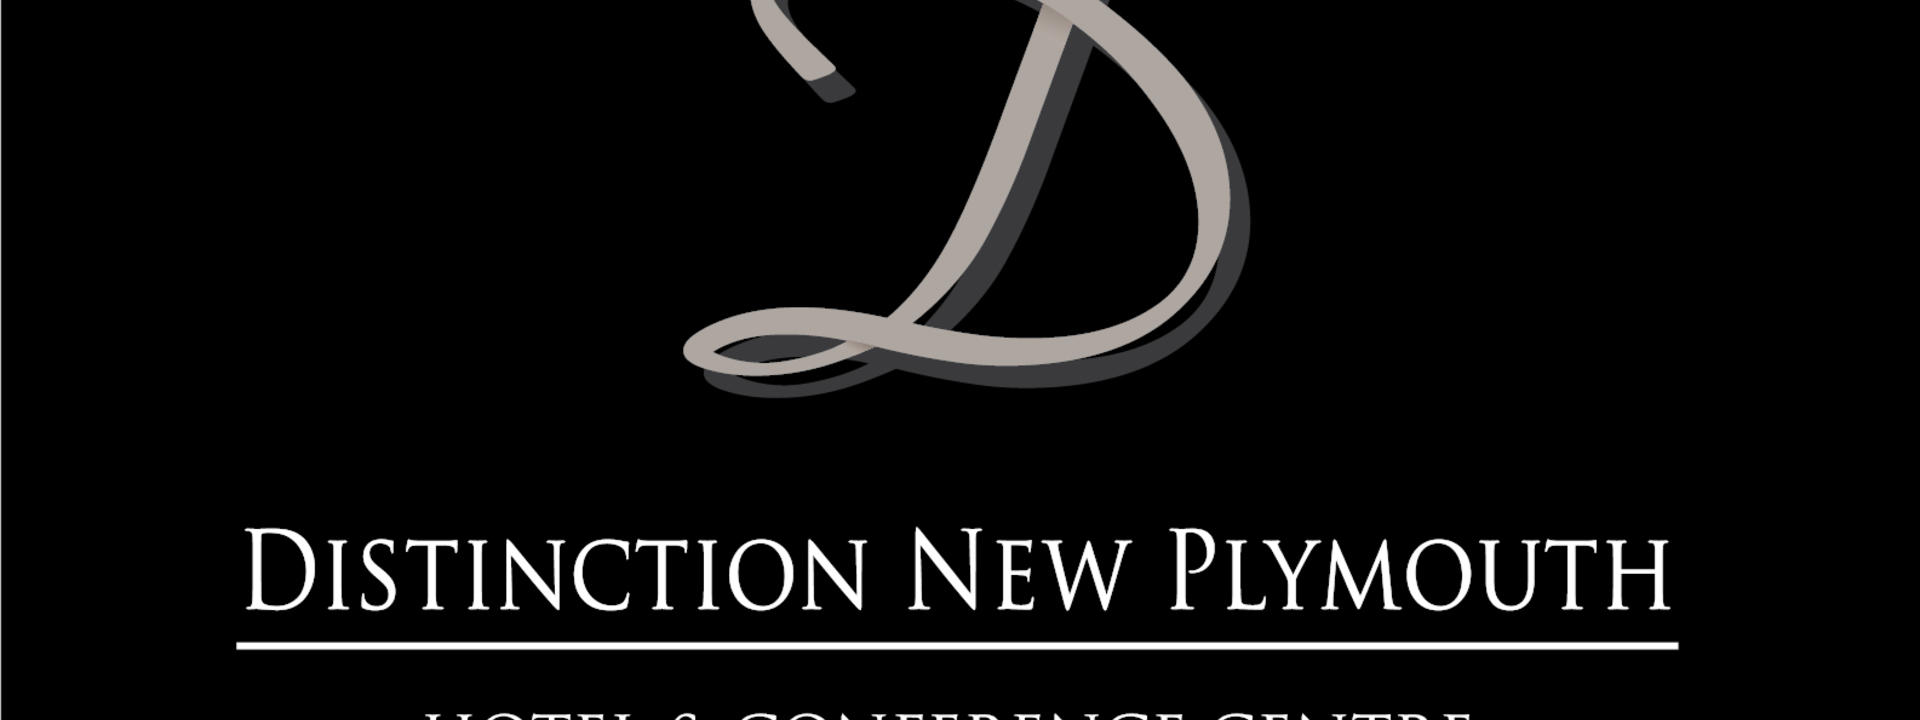 distinction-new-plymouth-logo-colour-on-black.jpg